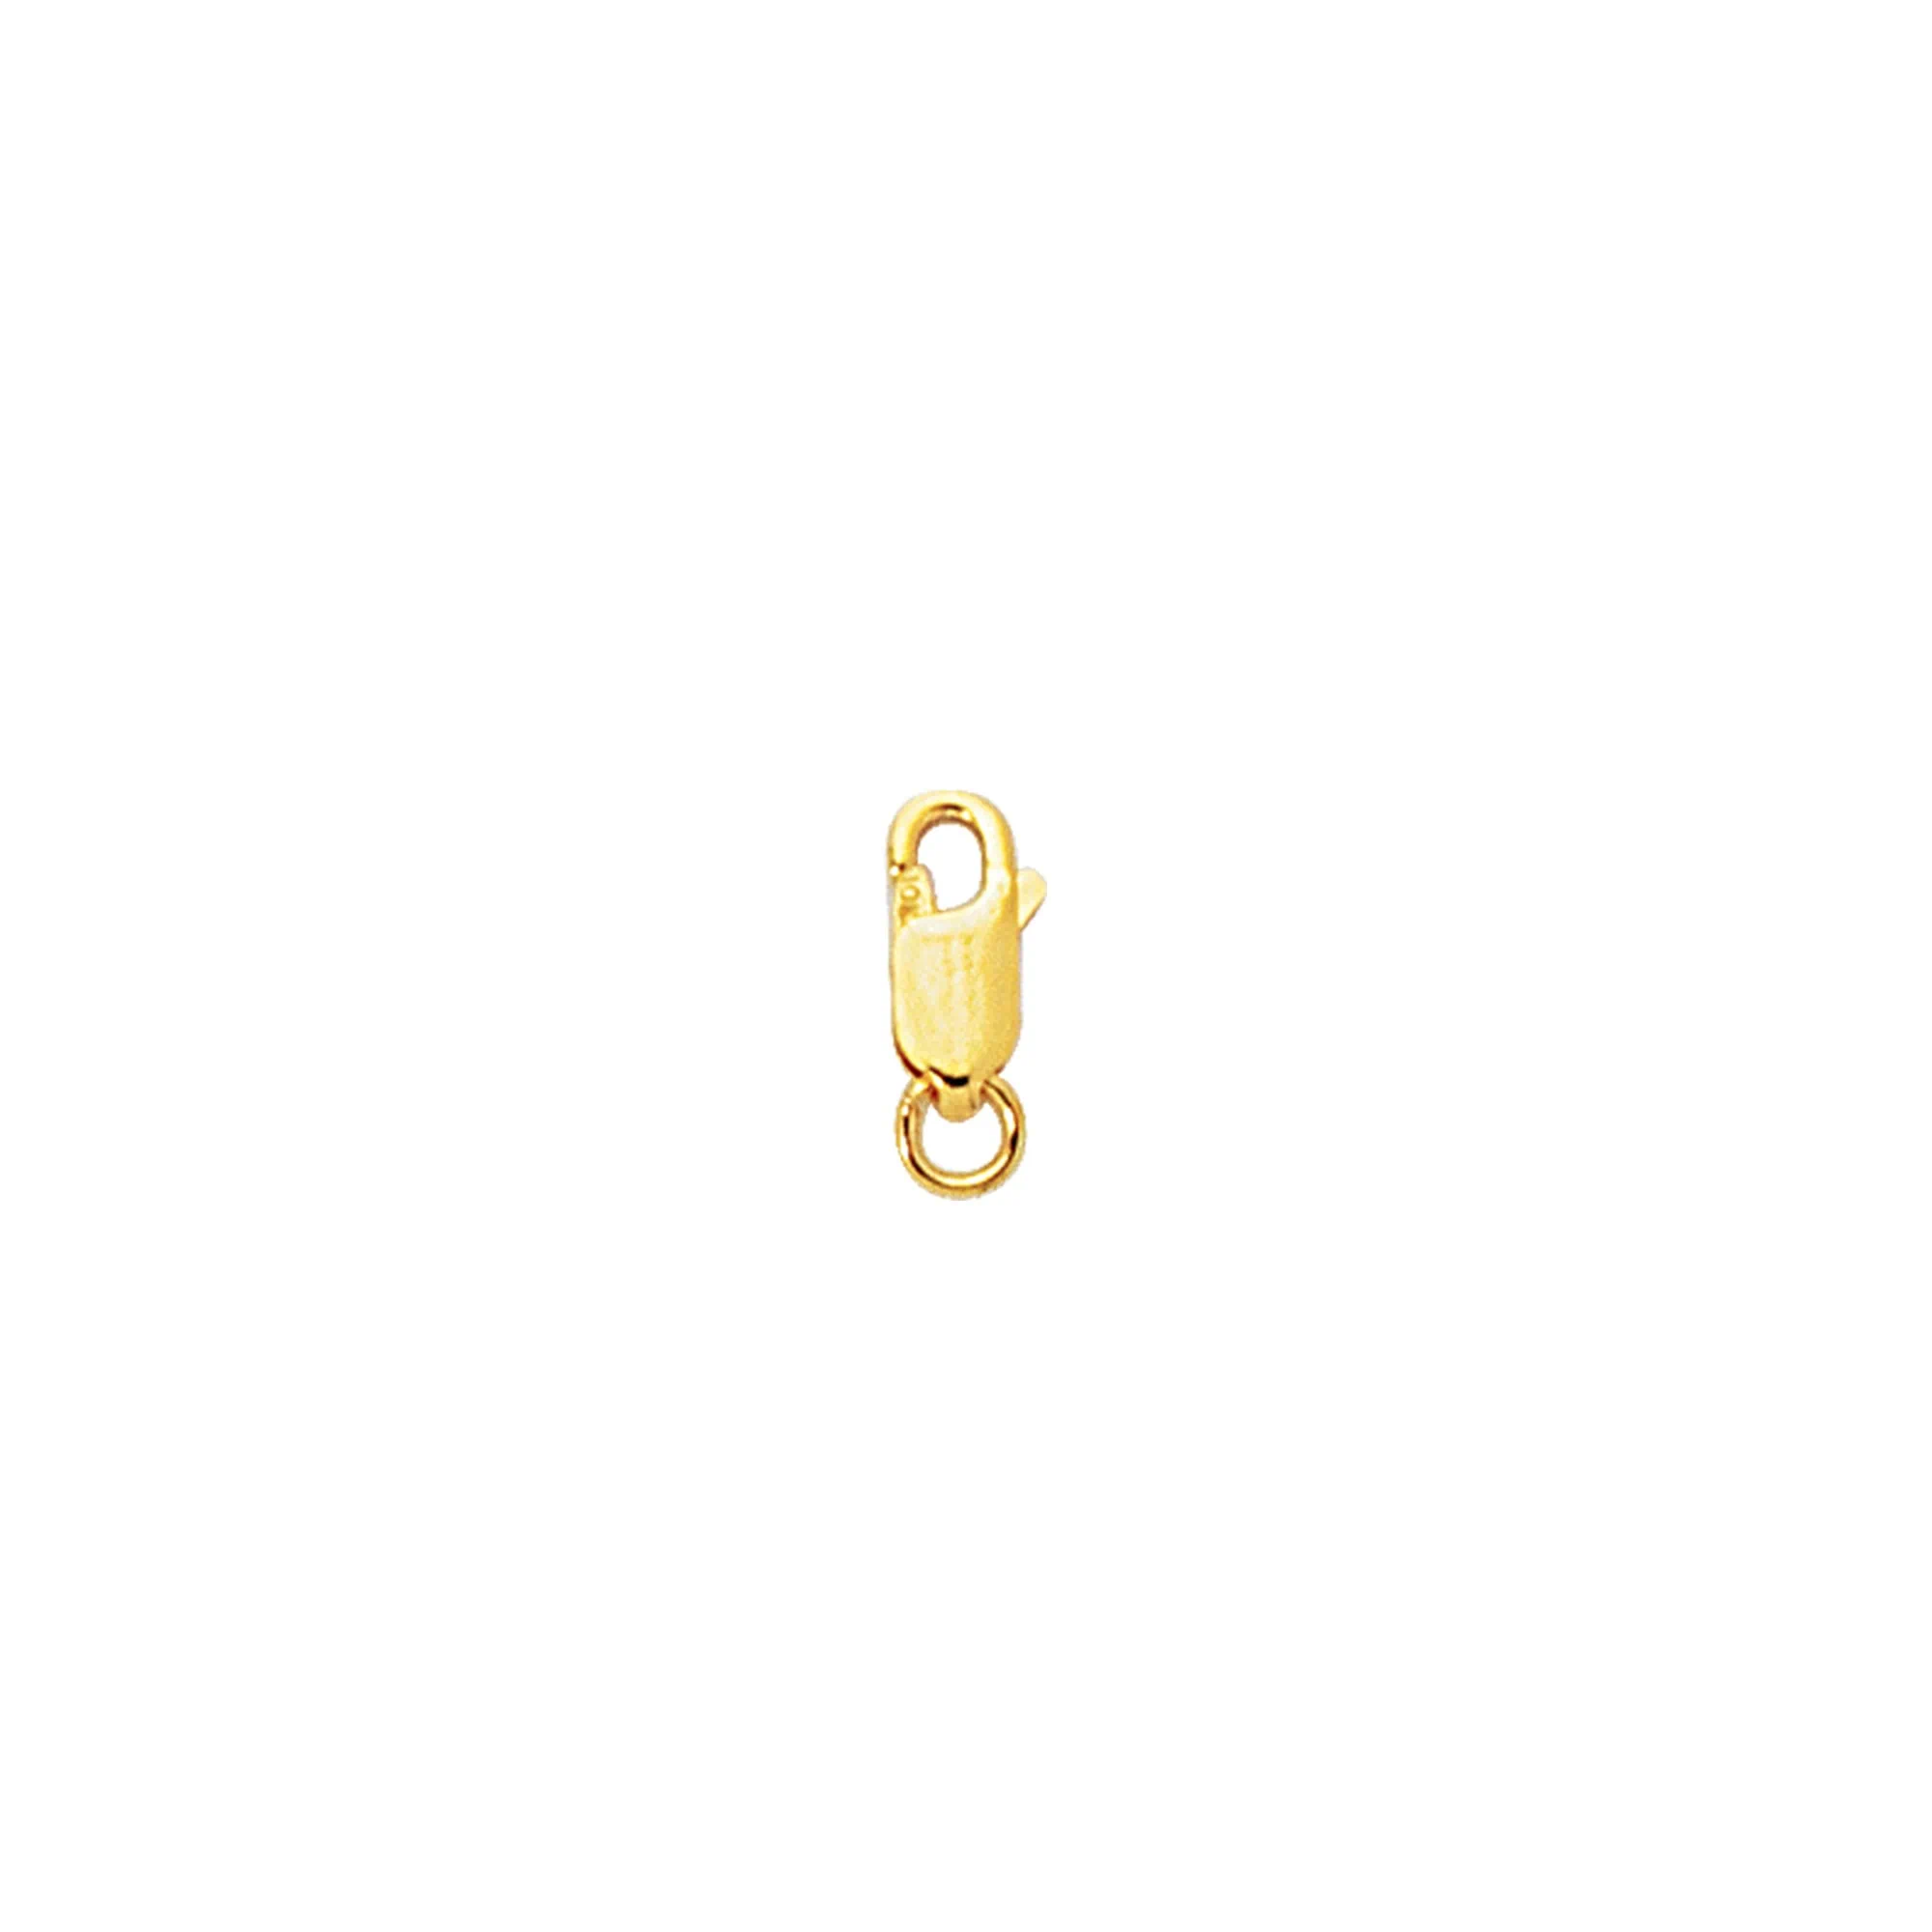 10K Gold 11mm Rectangular Lobster Lock